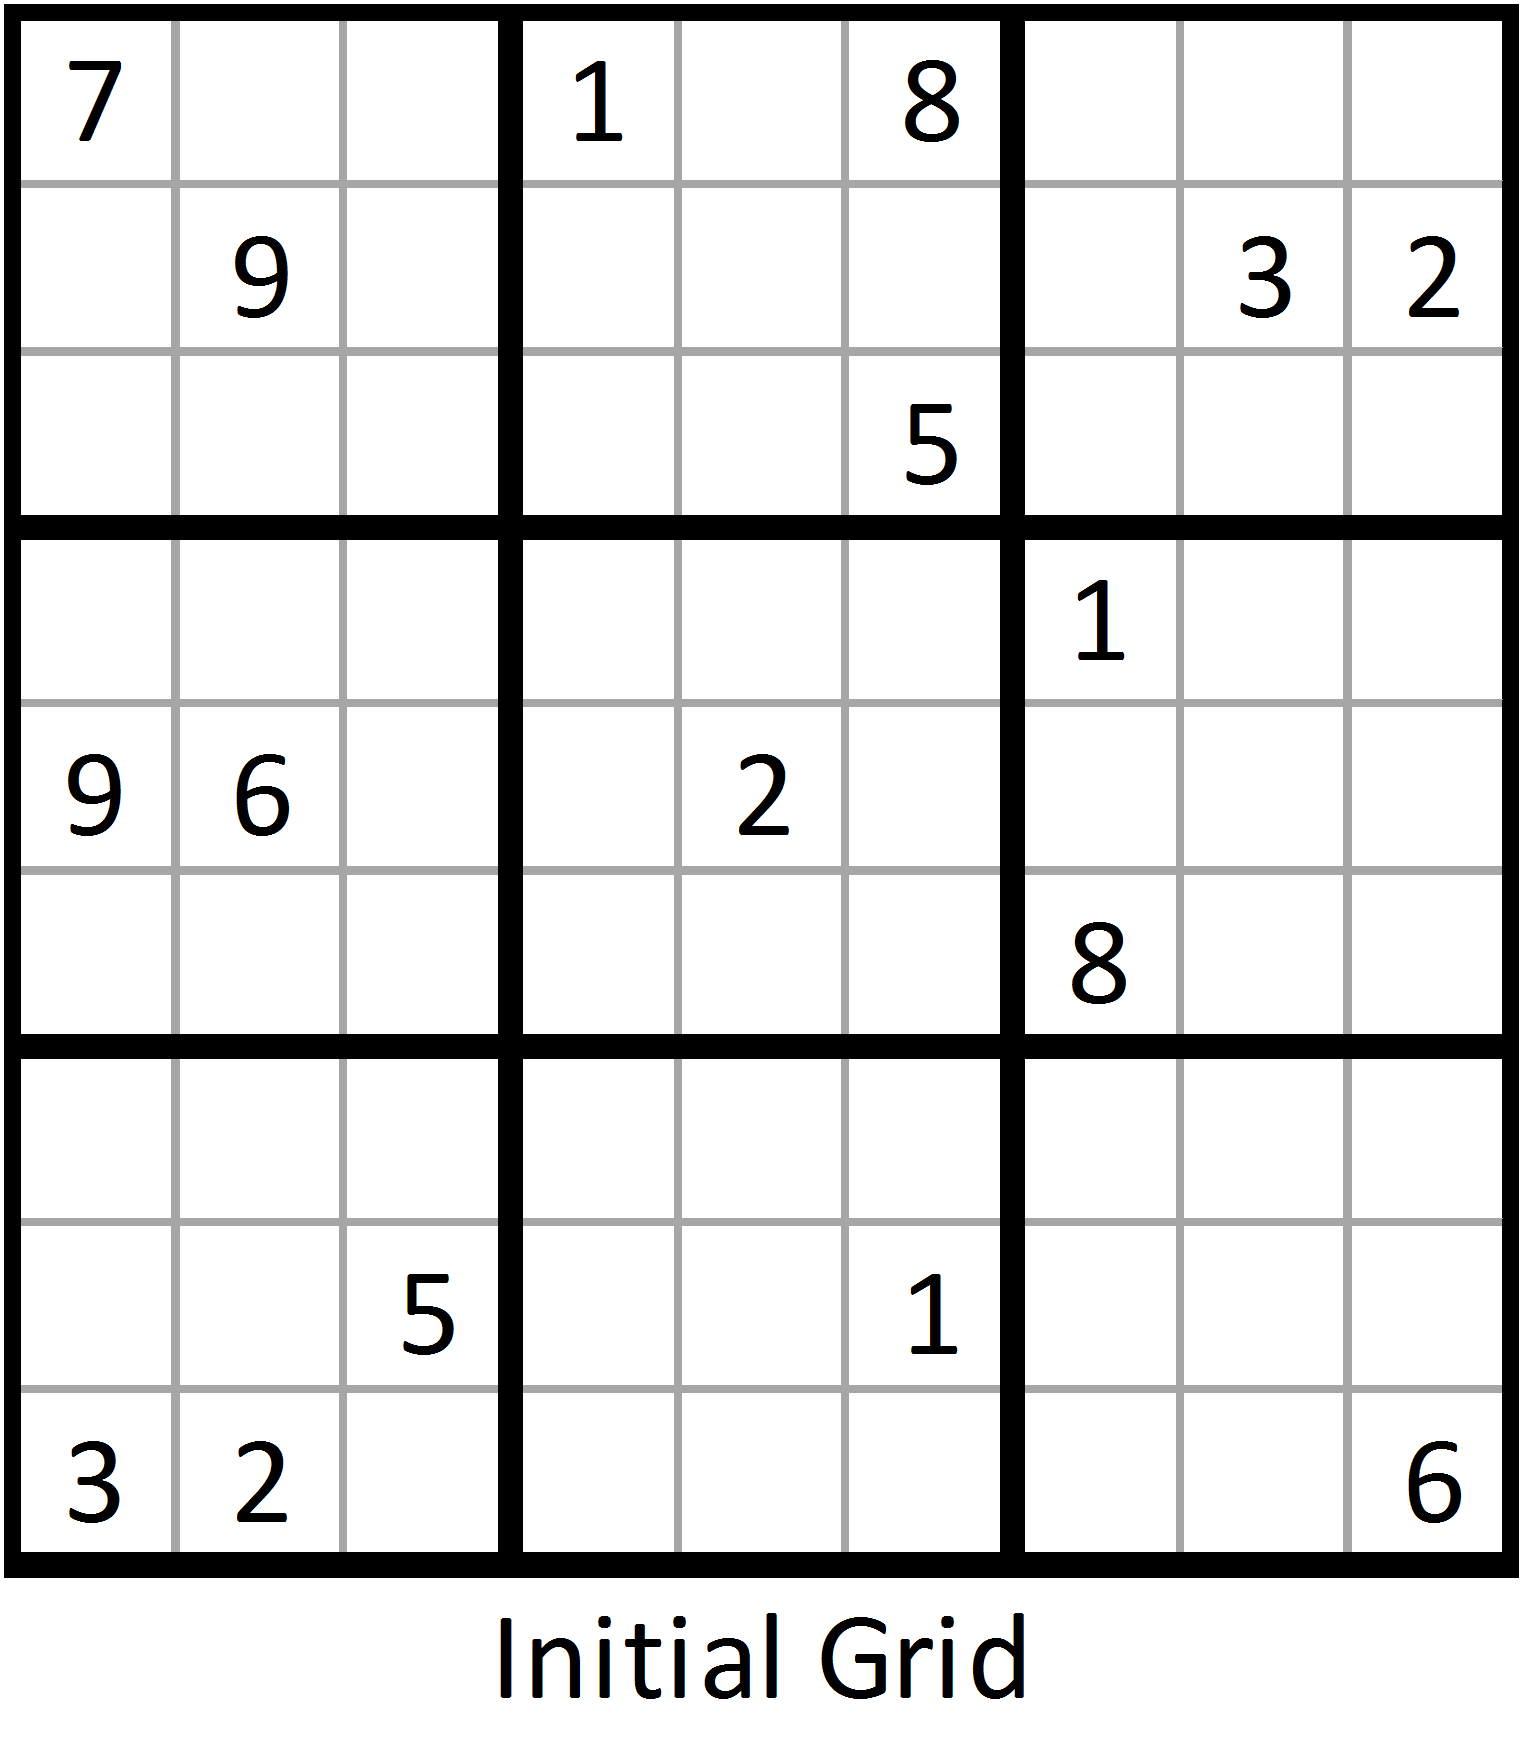 solve sudoku tips